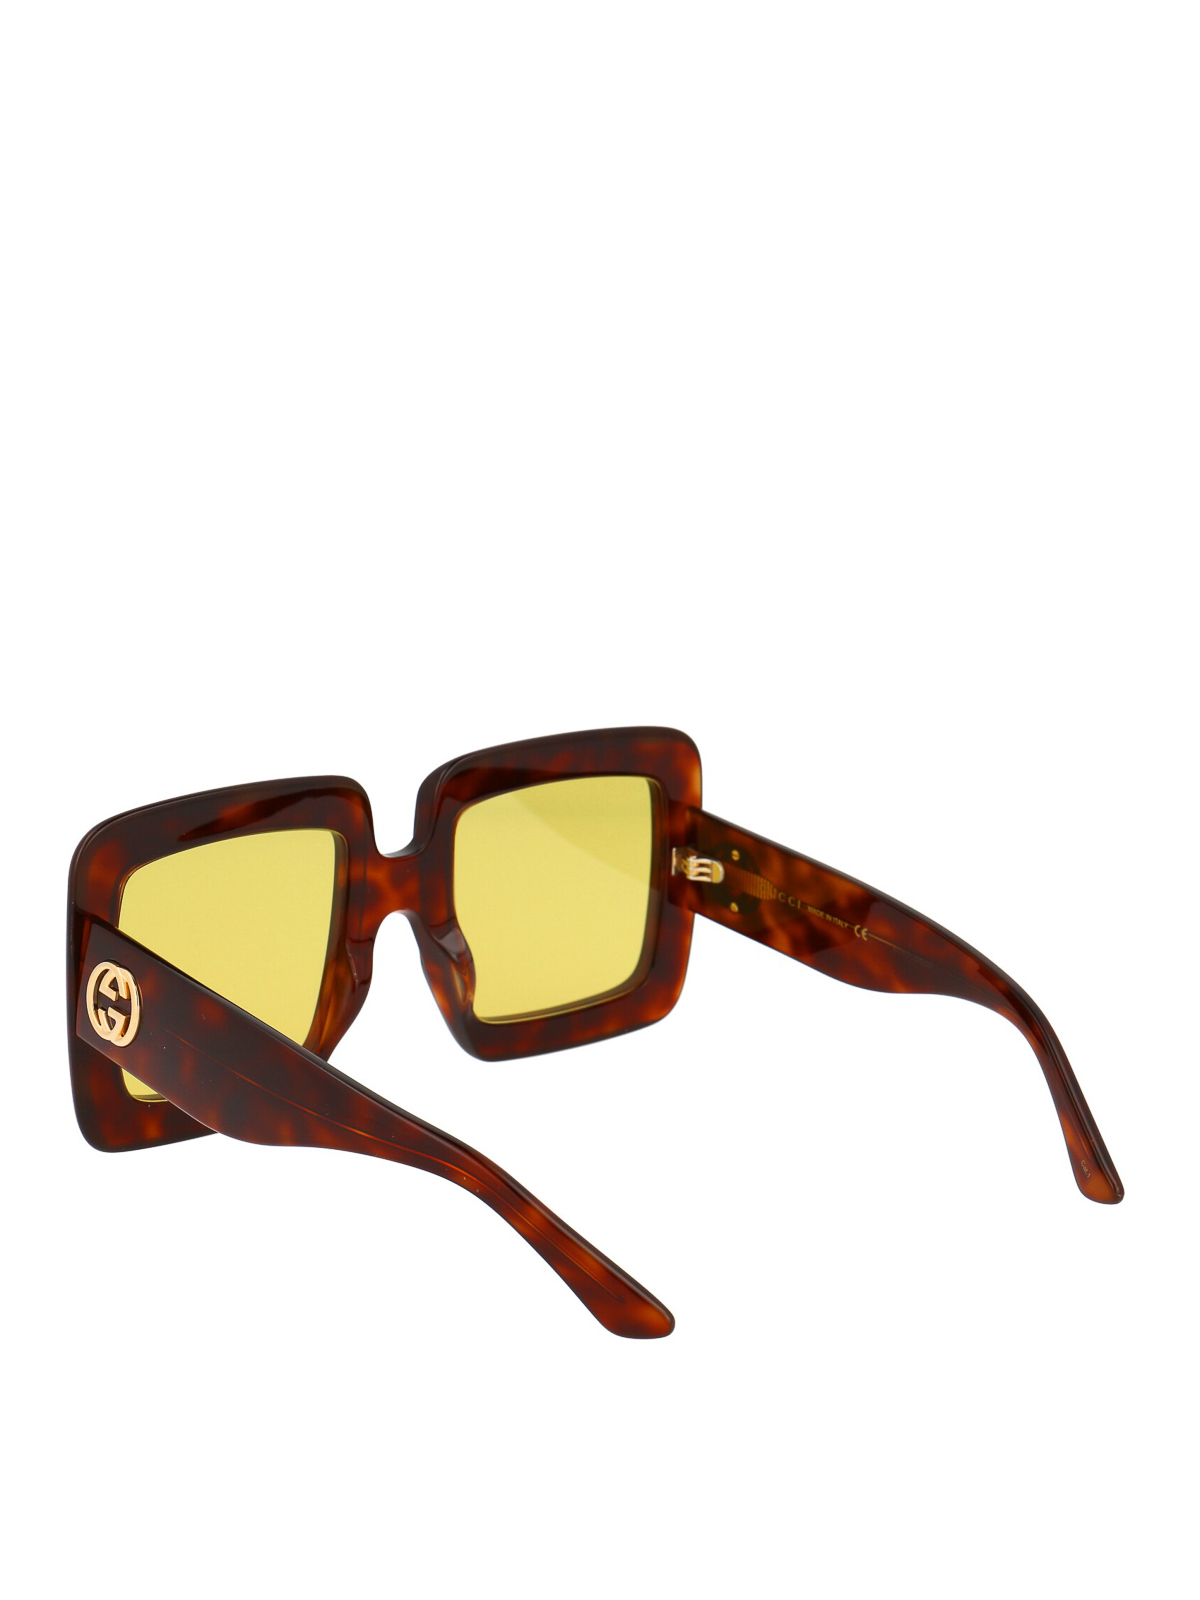 gucci sunglasses shop online